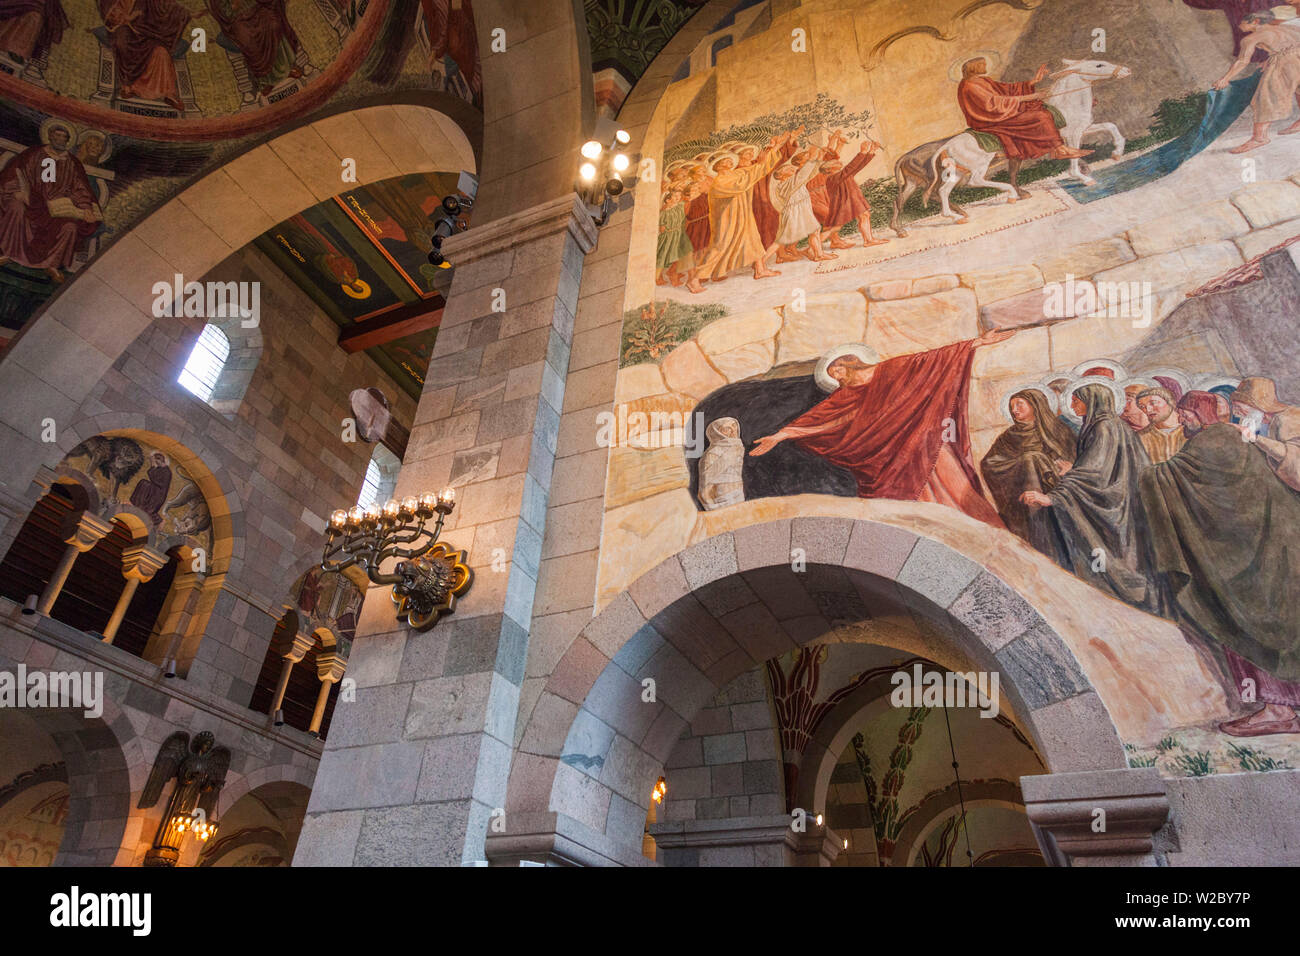 Denmark, Jutland, Viborg, Viborg Domkirke Cathdral, interior frescoes Stock Photo